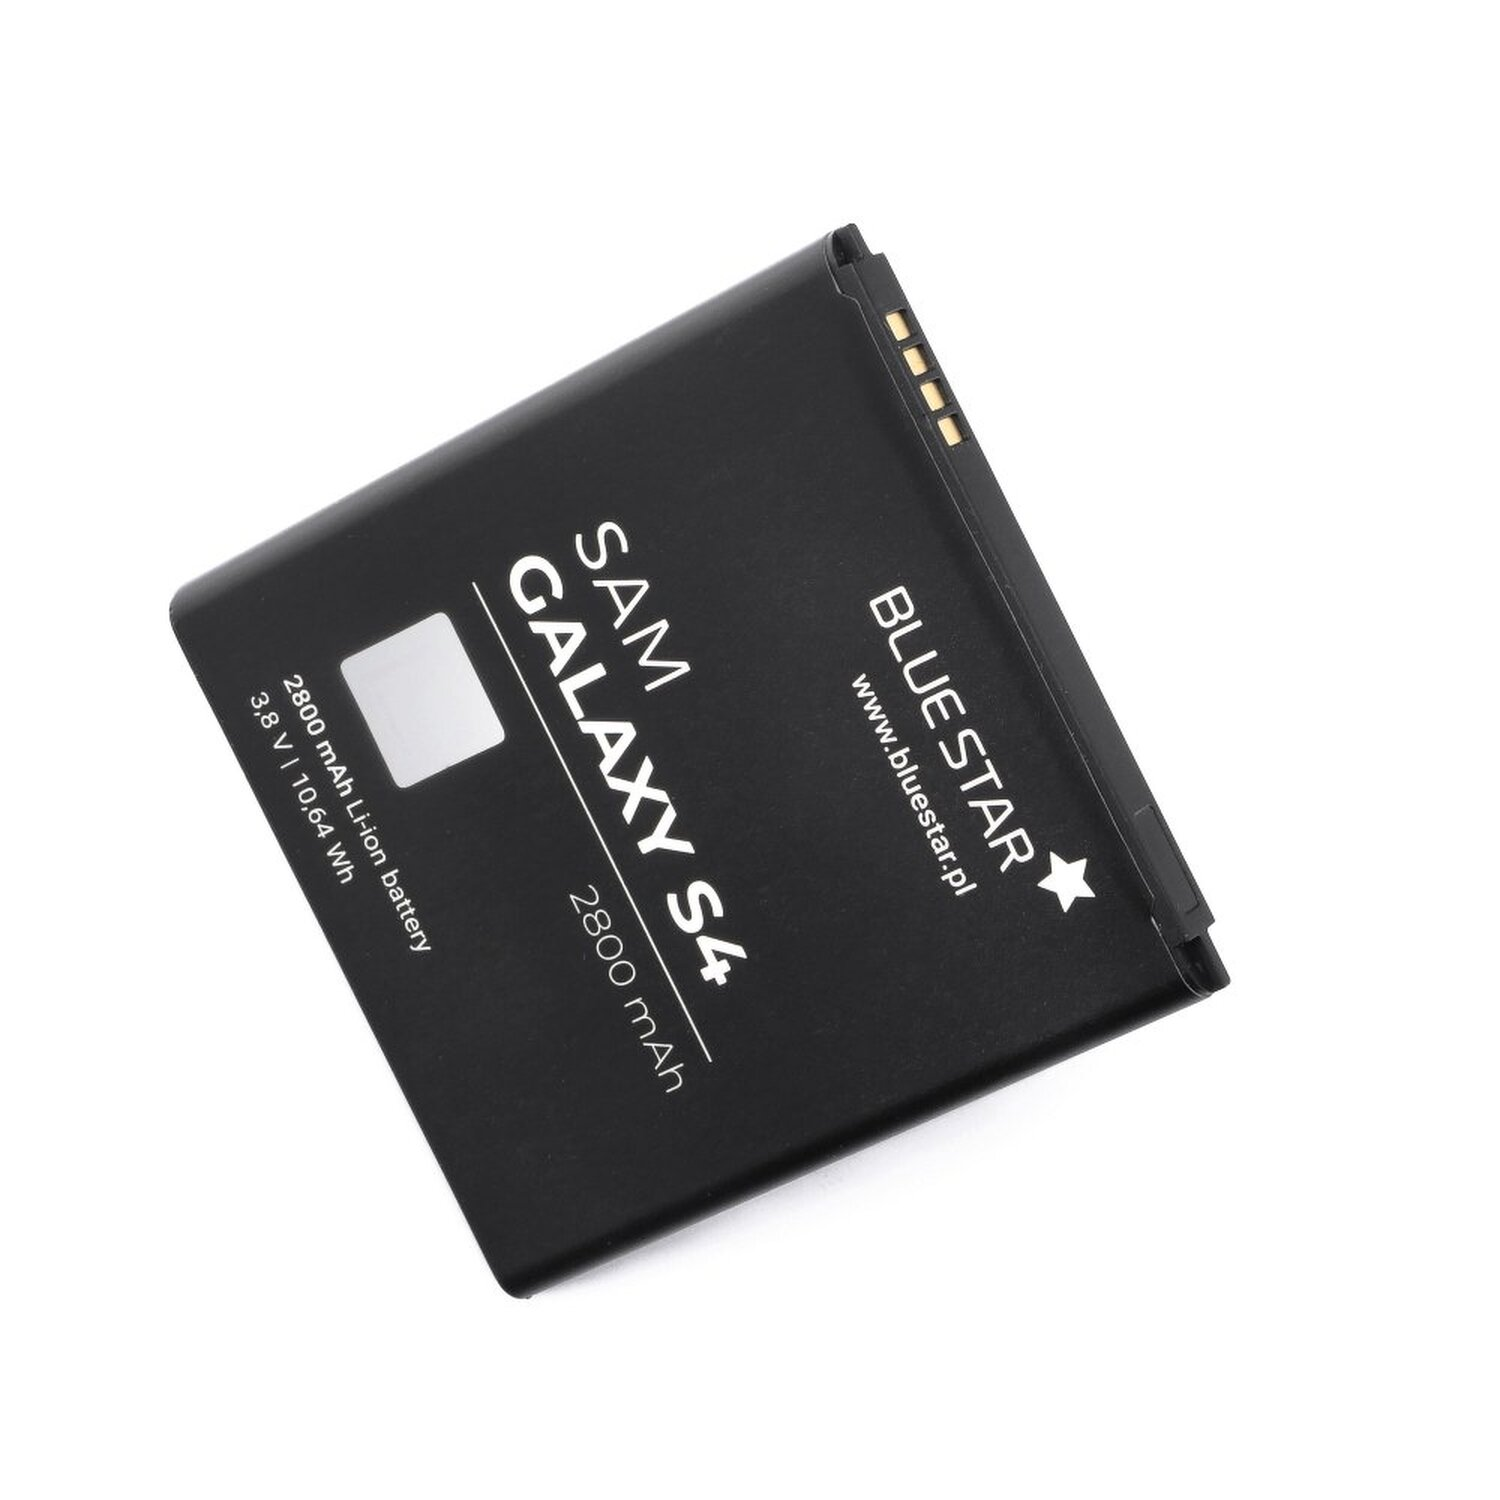 BLUESTAR Akku für Samsung Galaxy S4 I9500 Li-Ion Handyakku